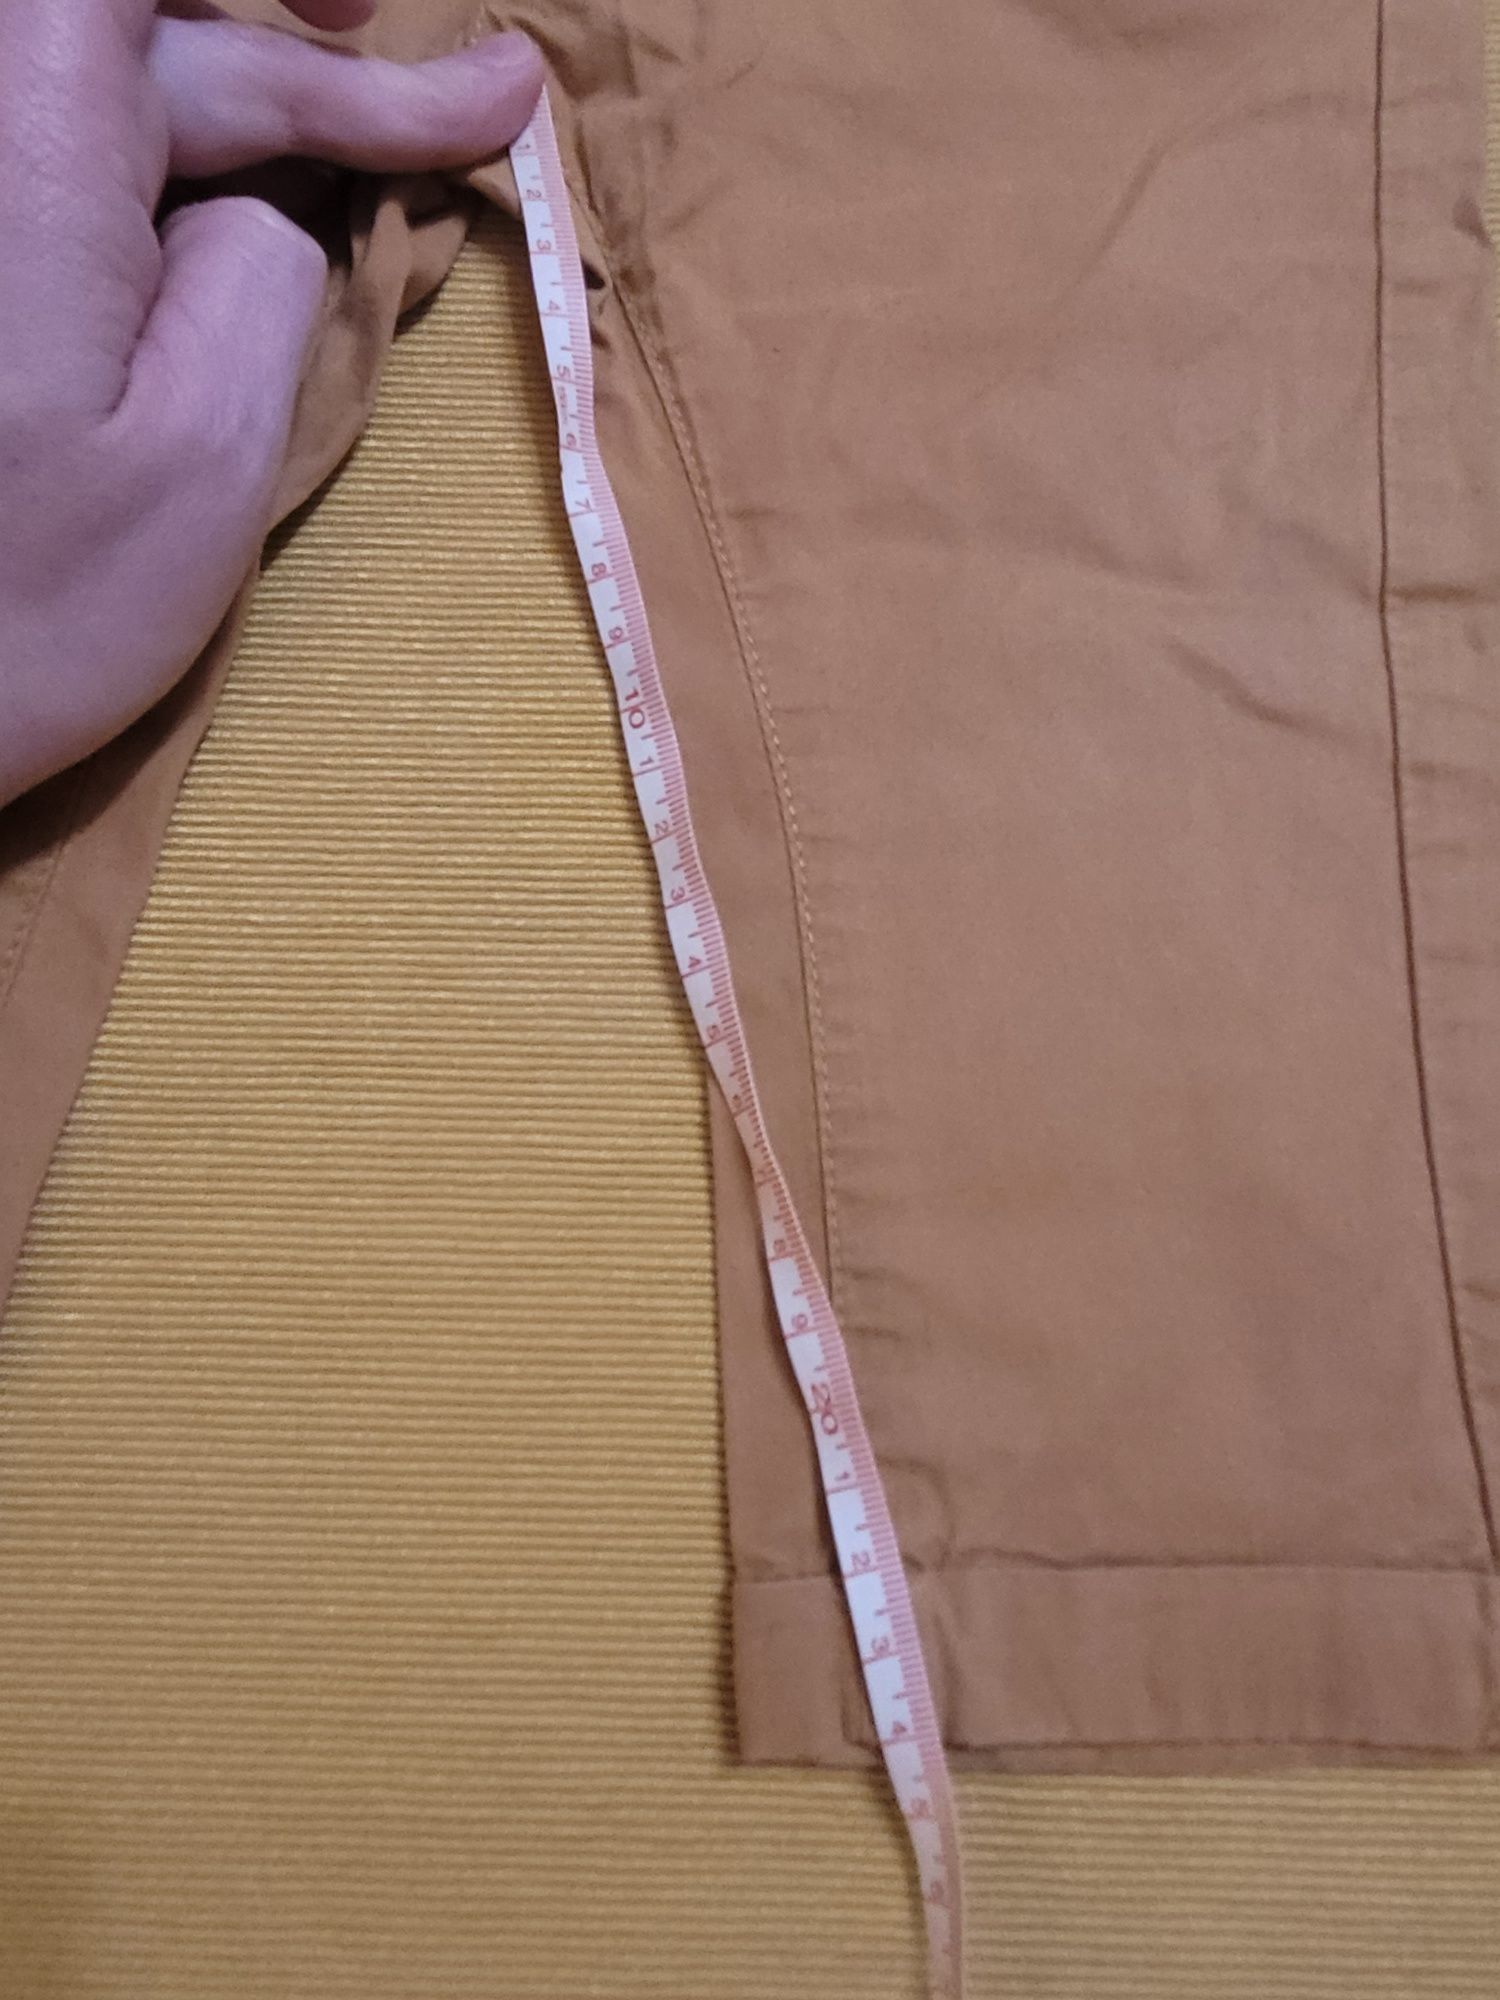 Komplet Koszula i Sweter h&m, spodnie Cool club, rozmiar 80